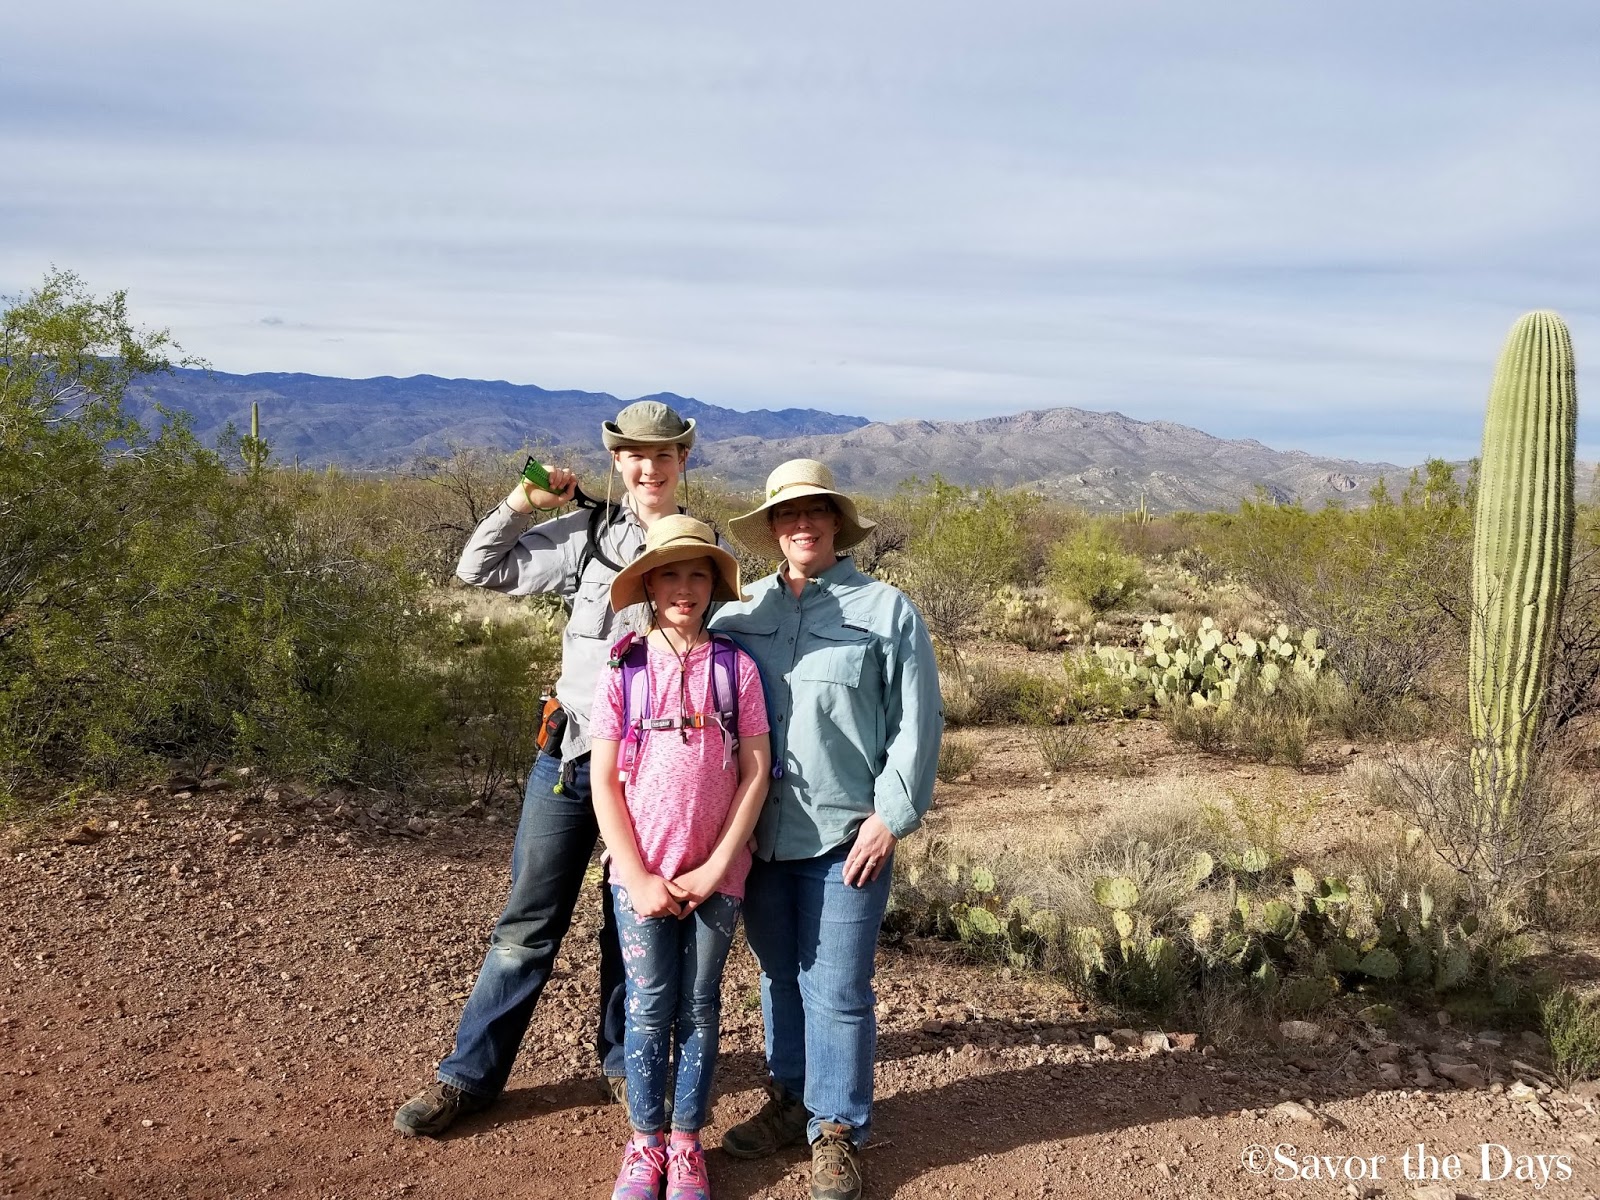 Savor The Days: The Saguaro National Park